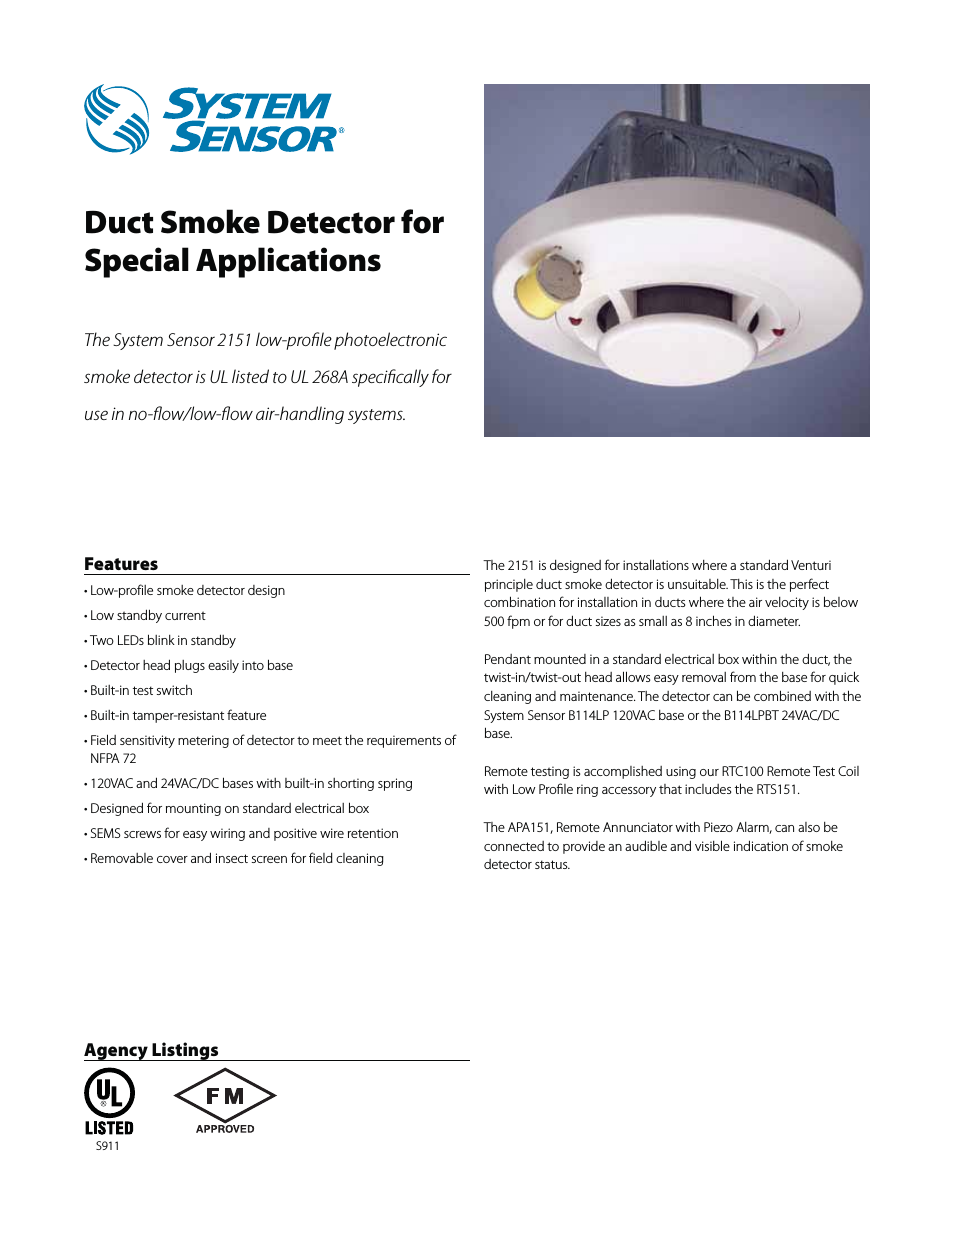 No Flow Duct Smoke Detector (System Sensor)